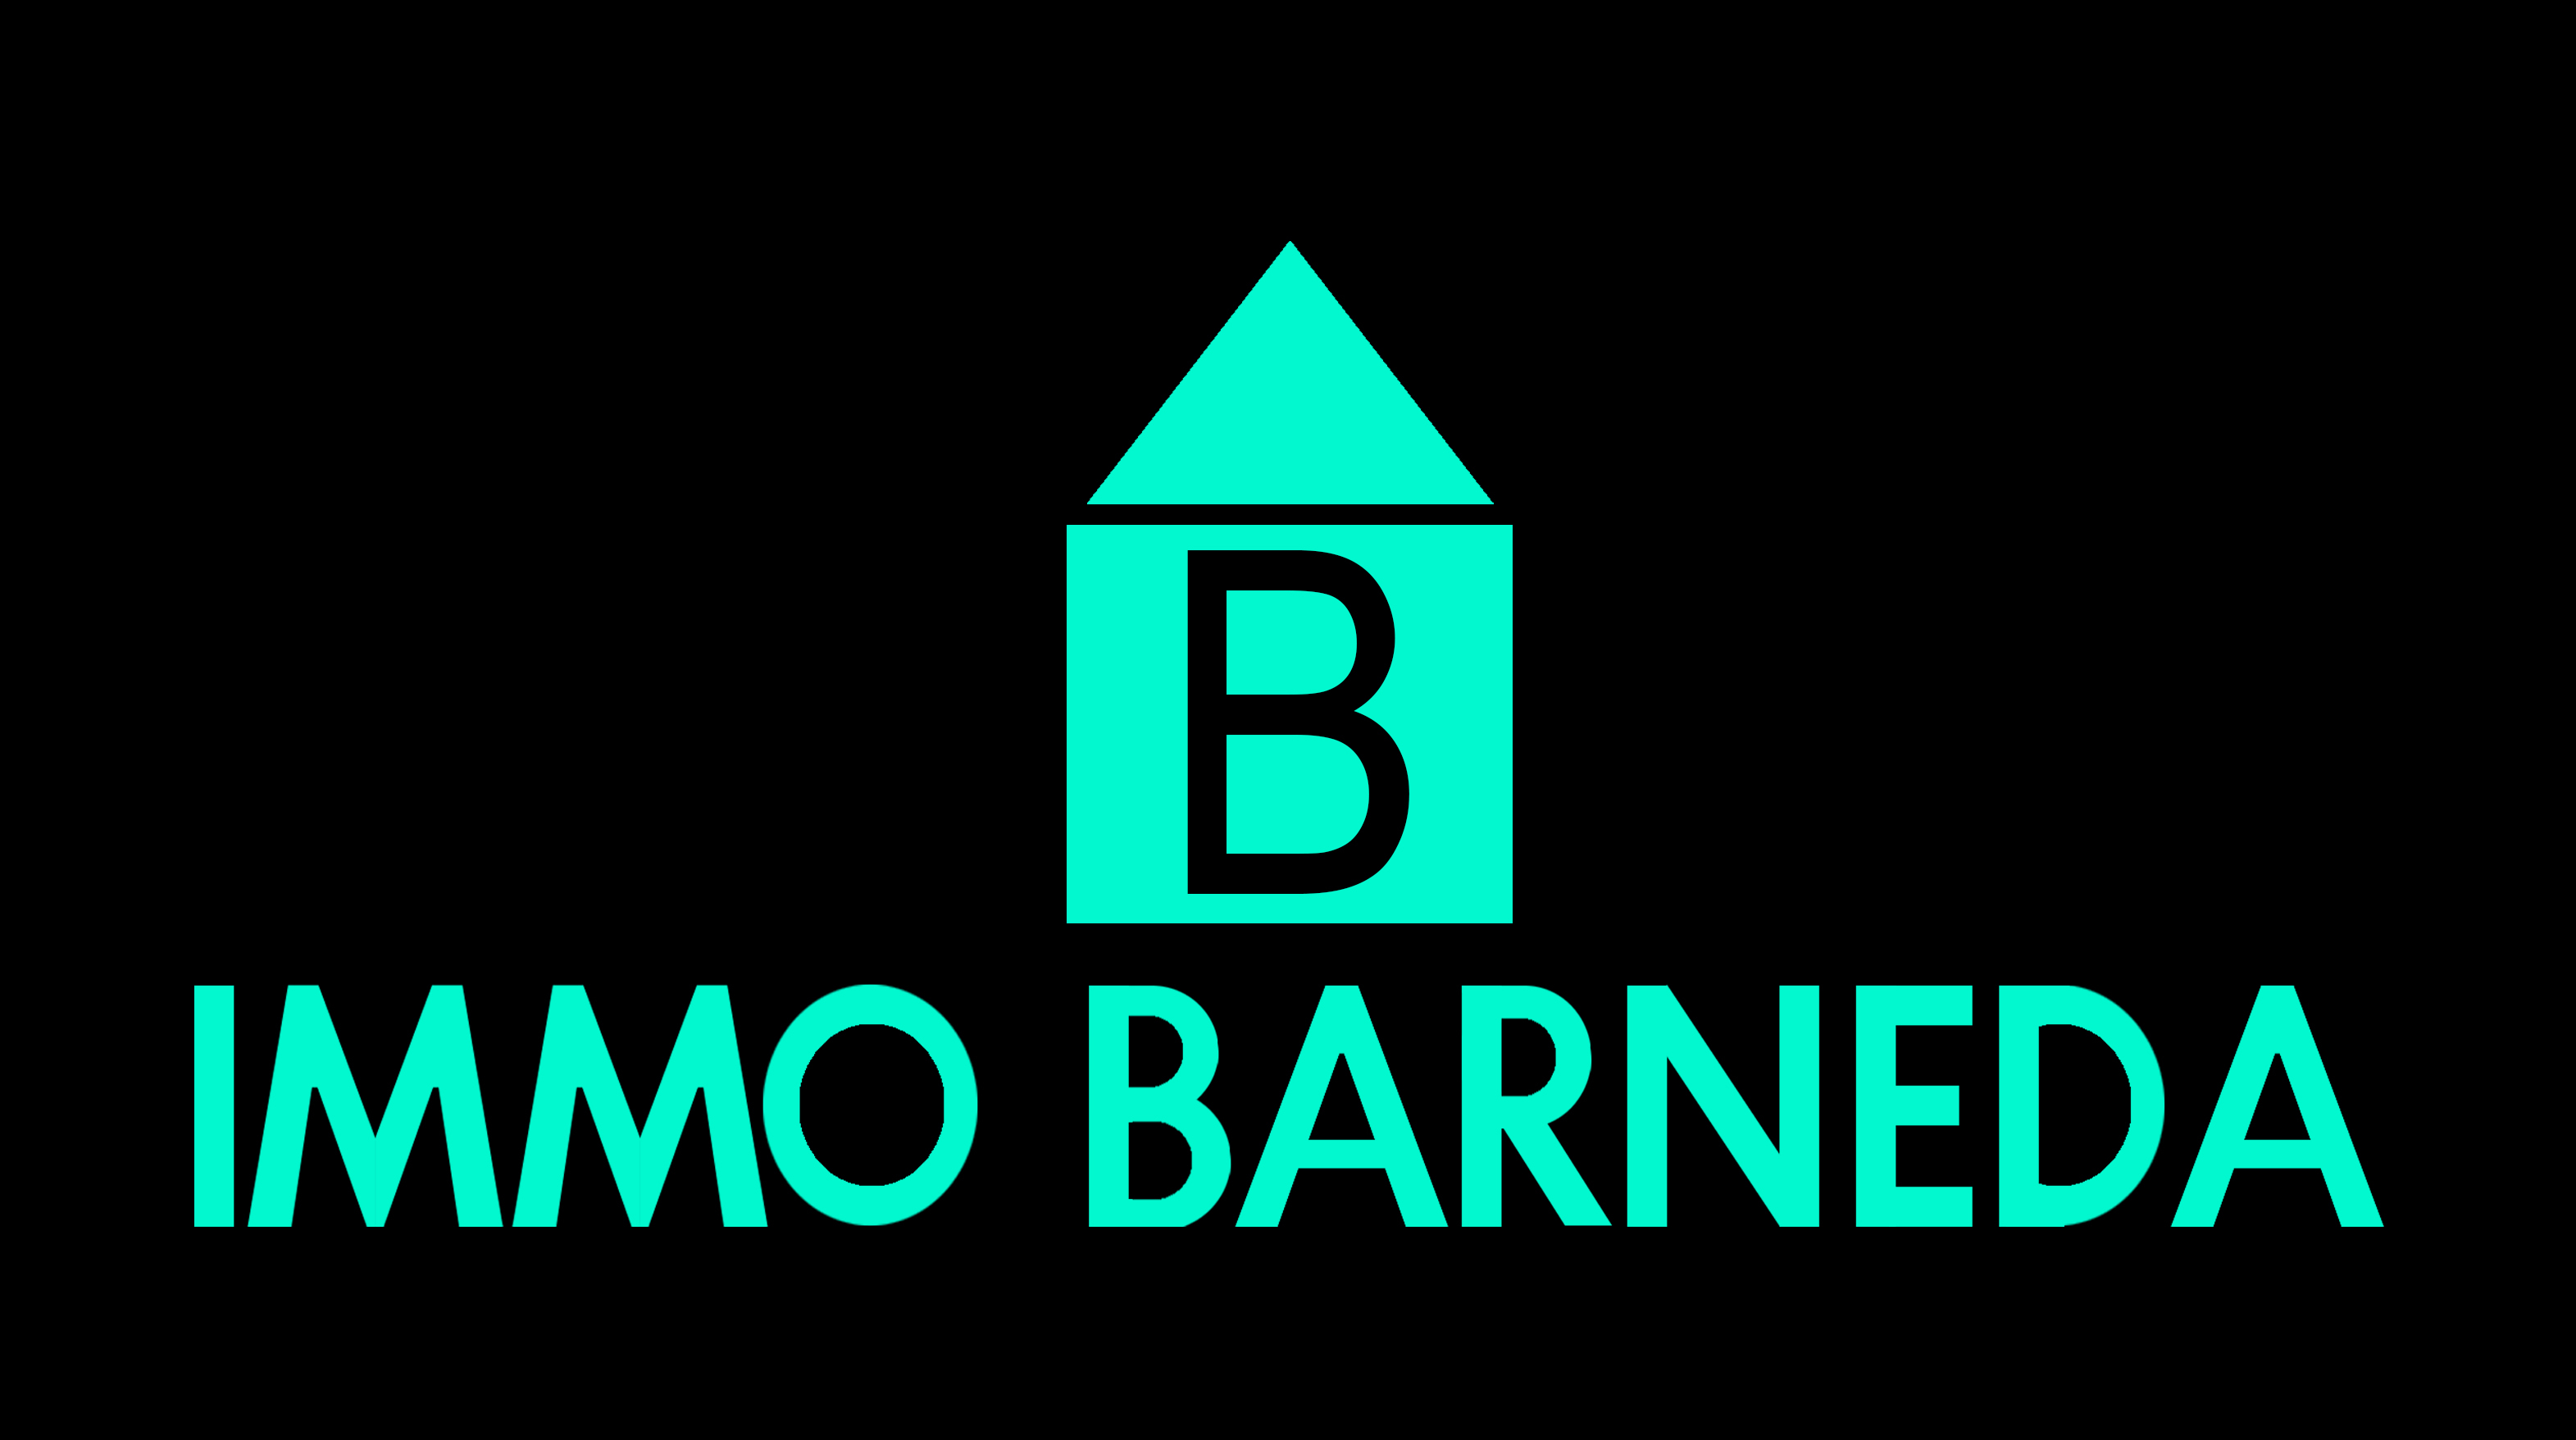 Real Estate Immo Barneda - Property management in the Costa Brava